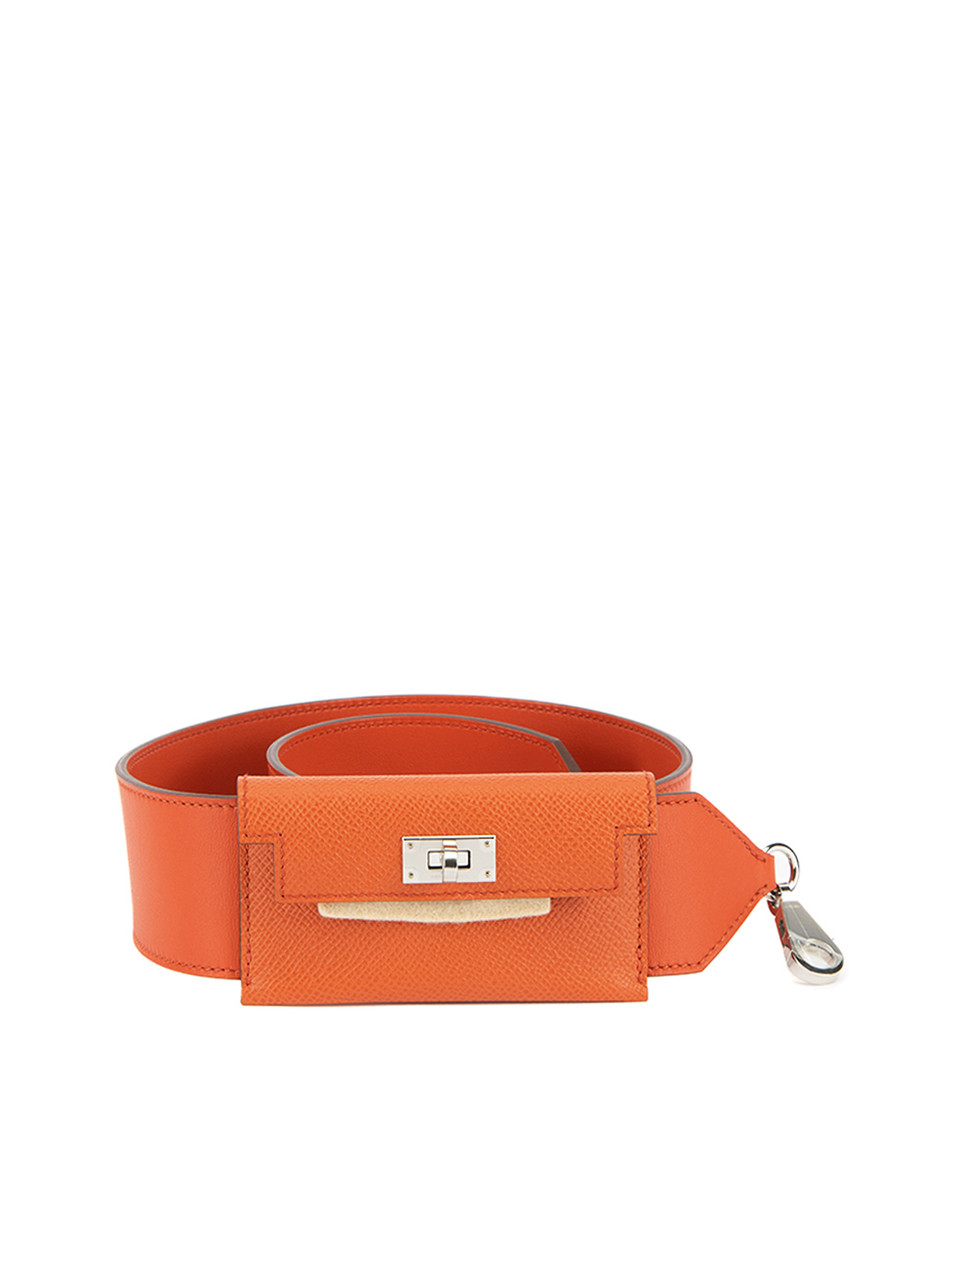 Hermès Orange Kelly Pocket Bag Strap